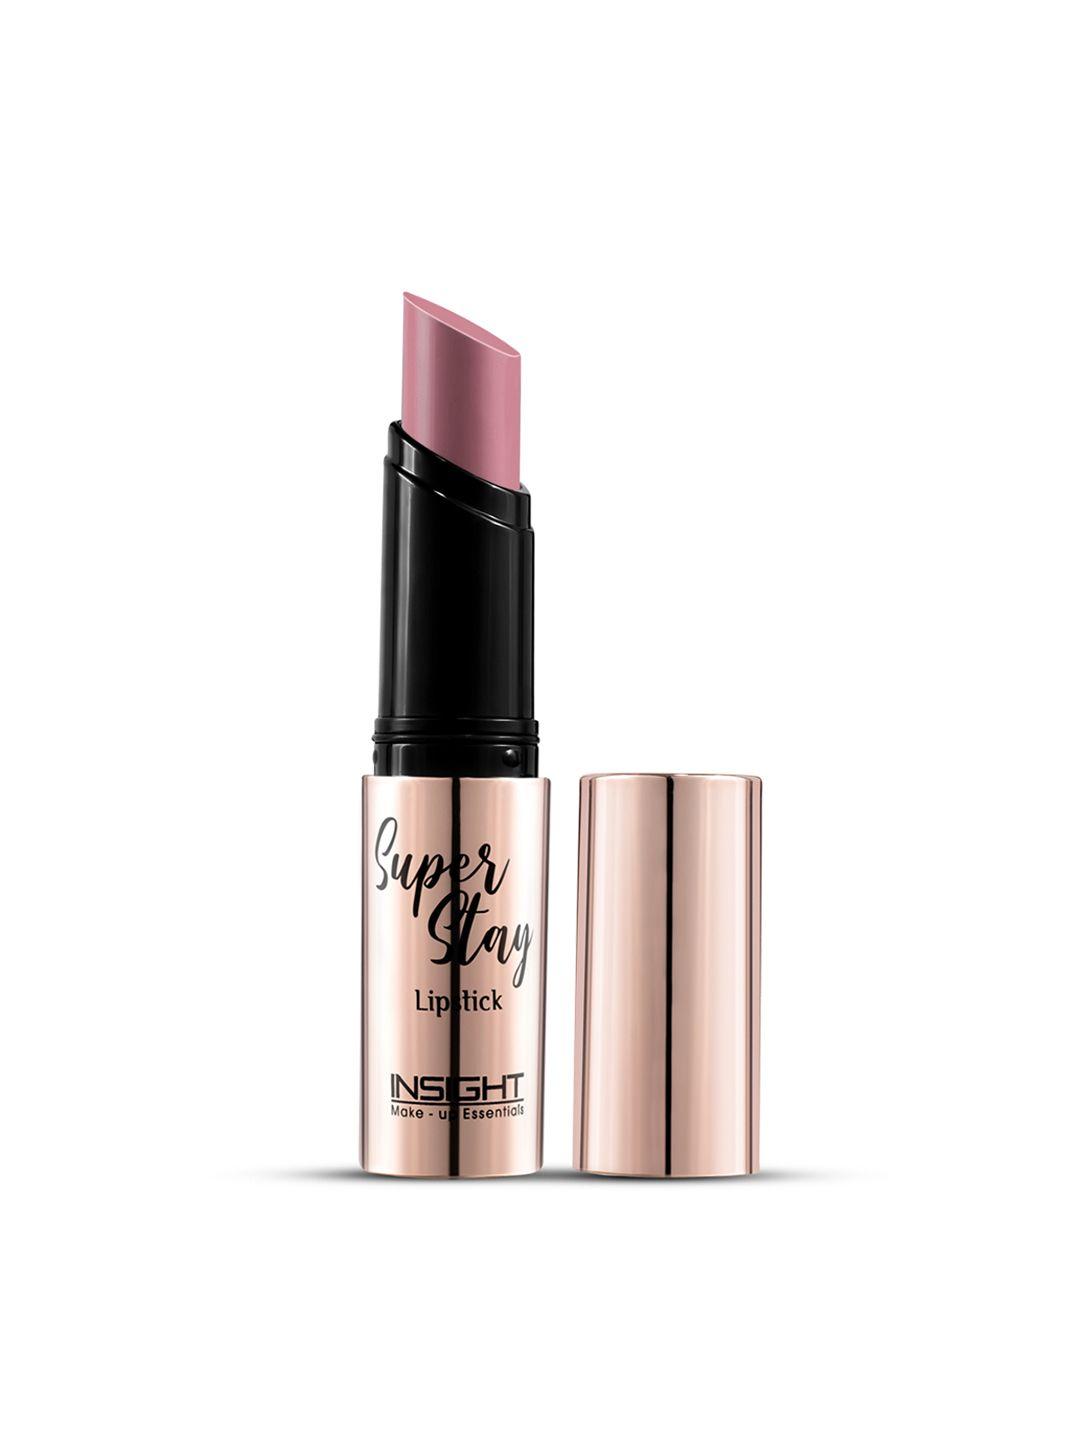 insight cosmetics long-lasting super stay lipstick 7 g - maeve